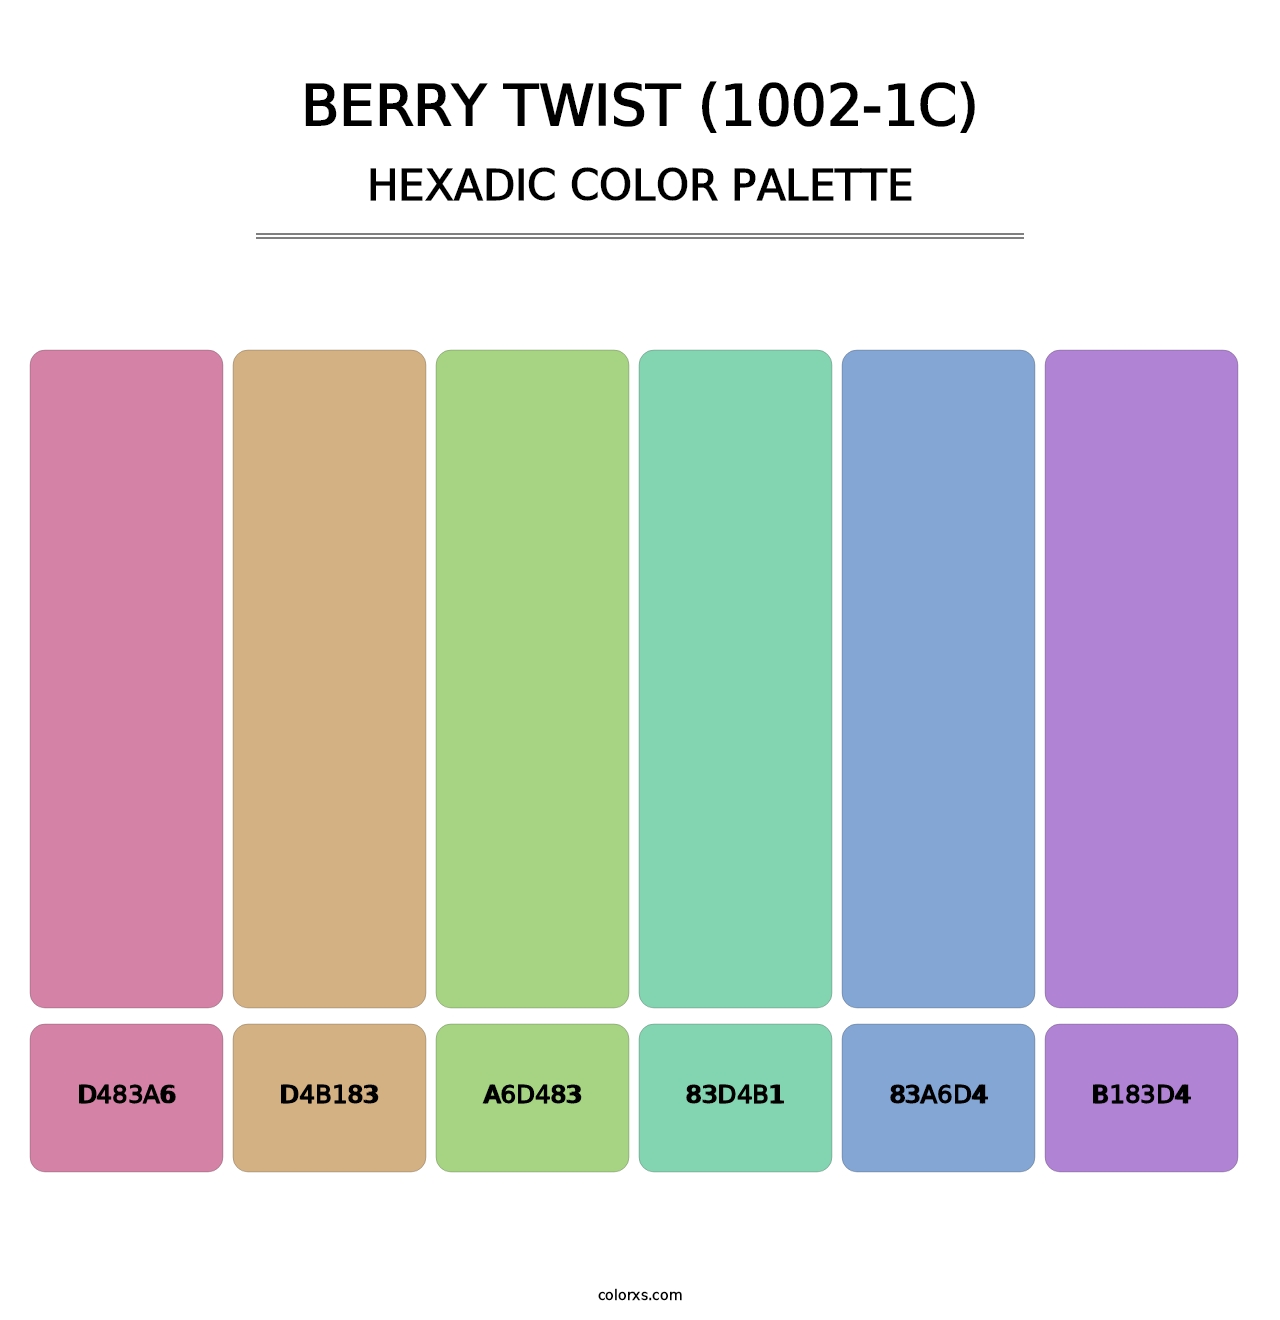 Berry Twist (1002-1C) - Hexadic Color Palette